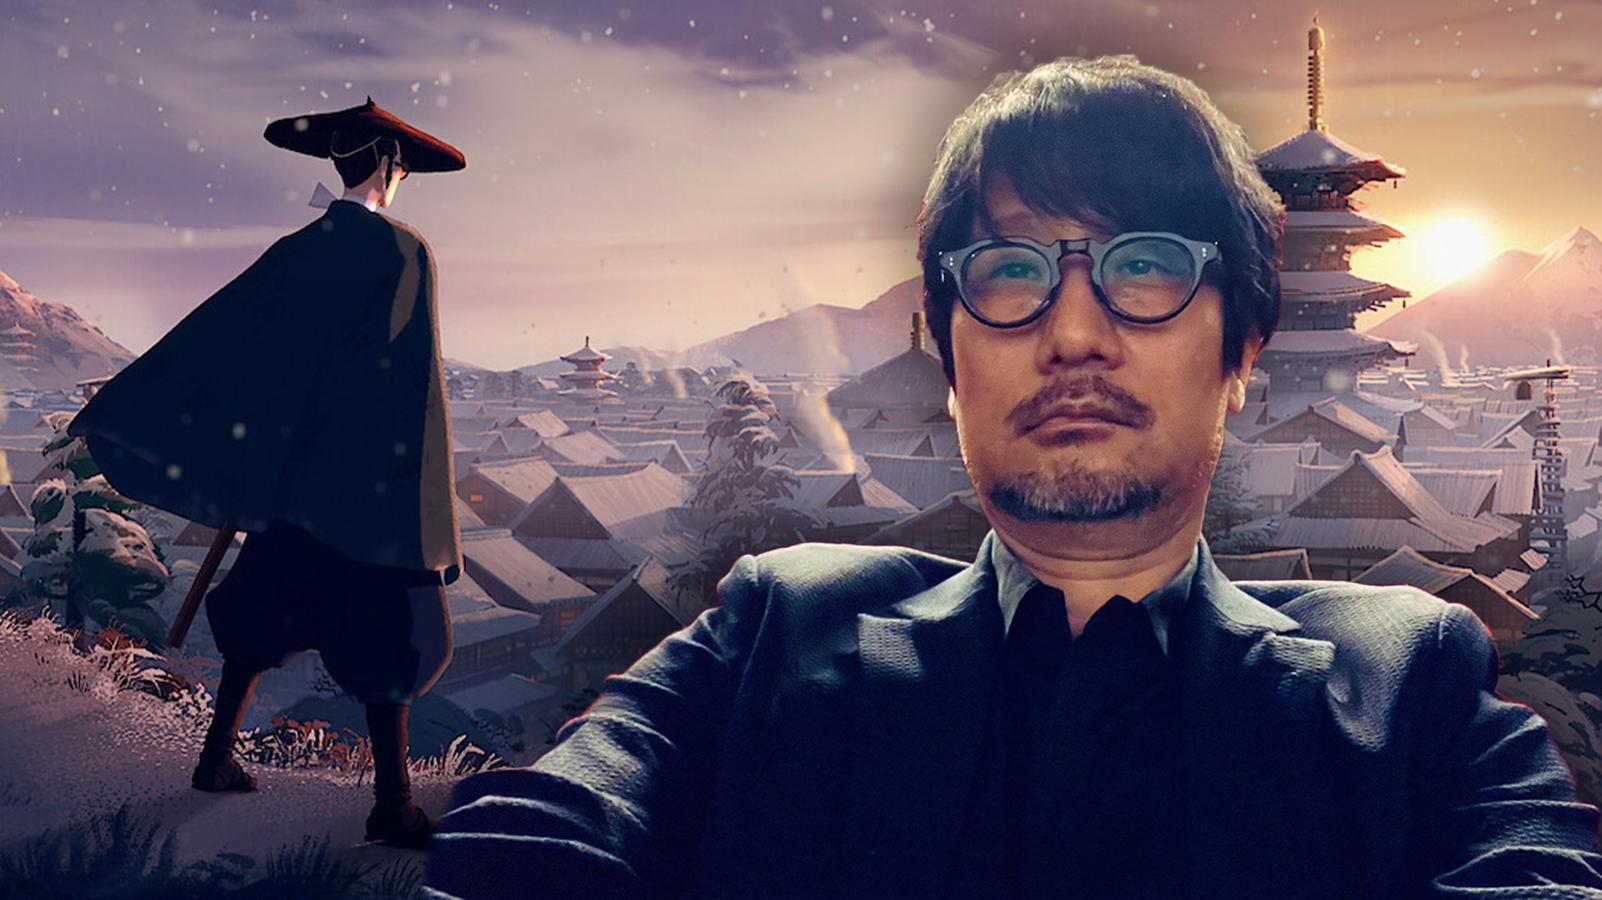 Hideo Kojima's documentary will be a Disney+ exclusive